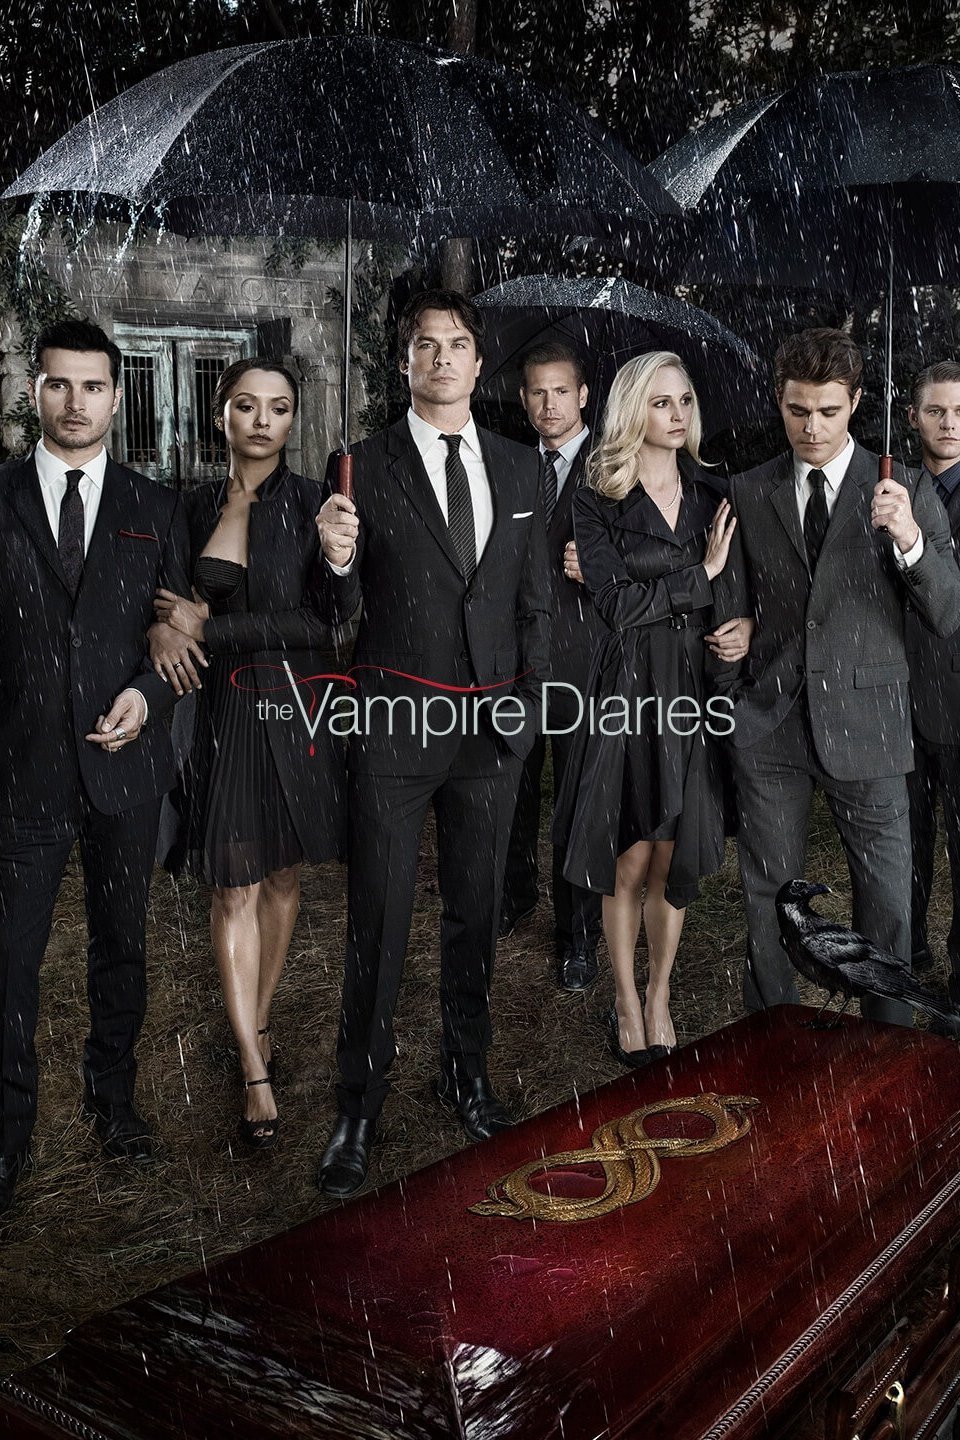 Is The Vampire Diaries leaving Netflix UK?